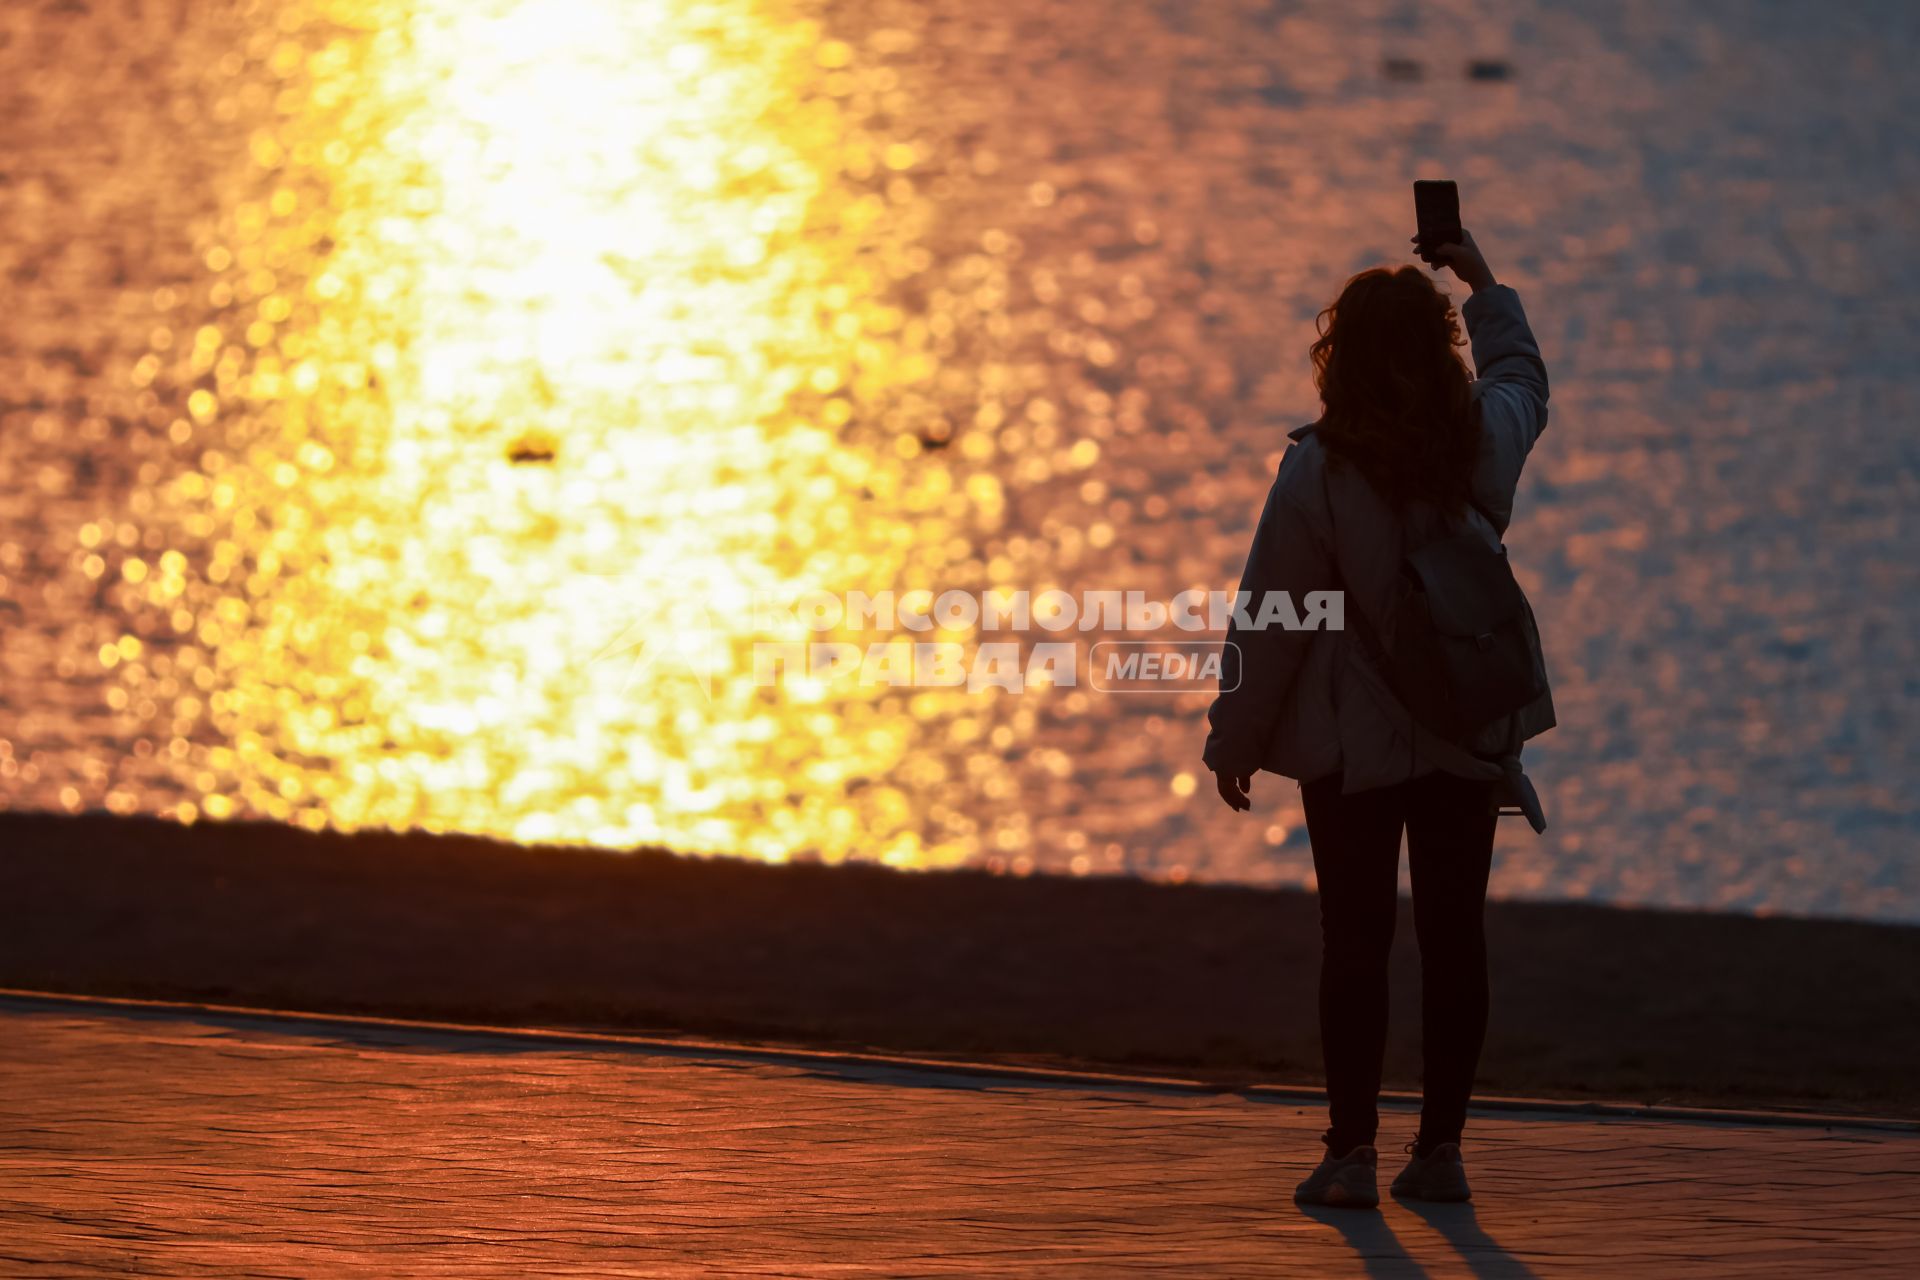 Красноярск. Девушка делает селфи на набережной во время заката.